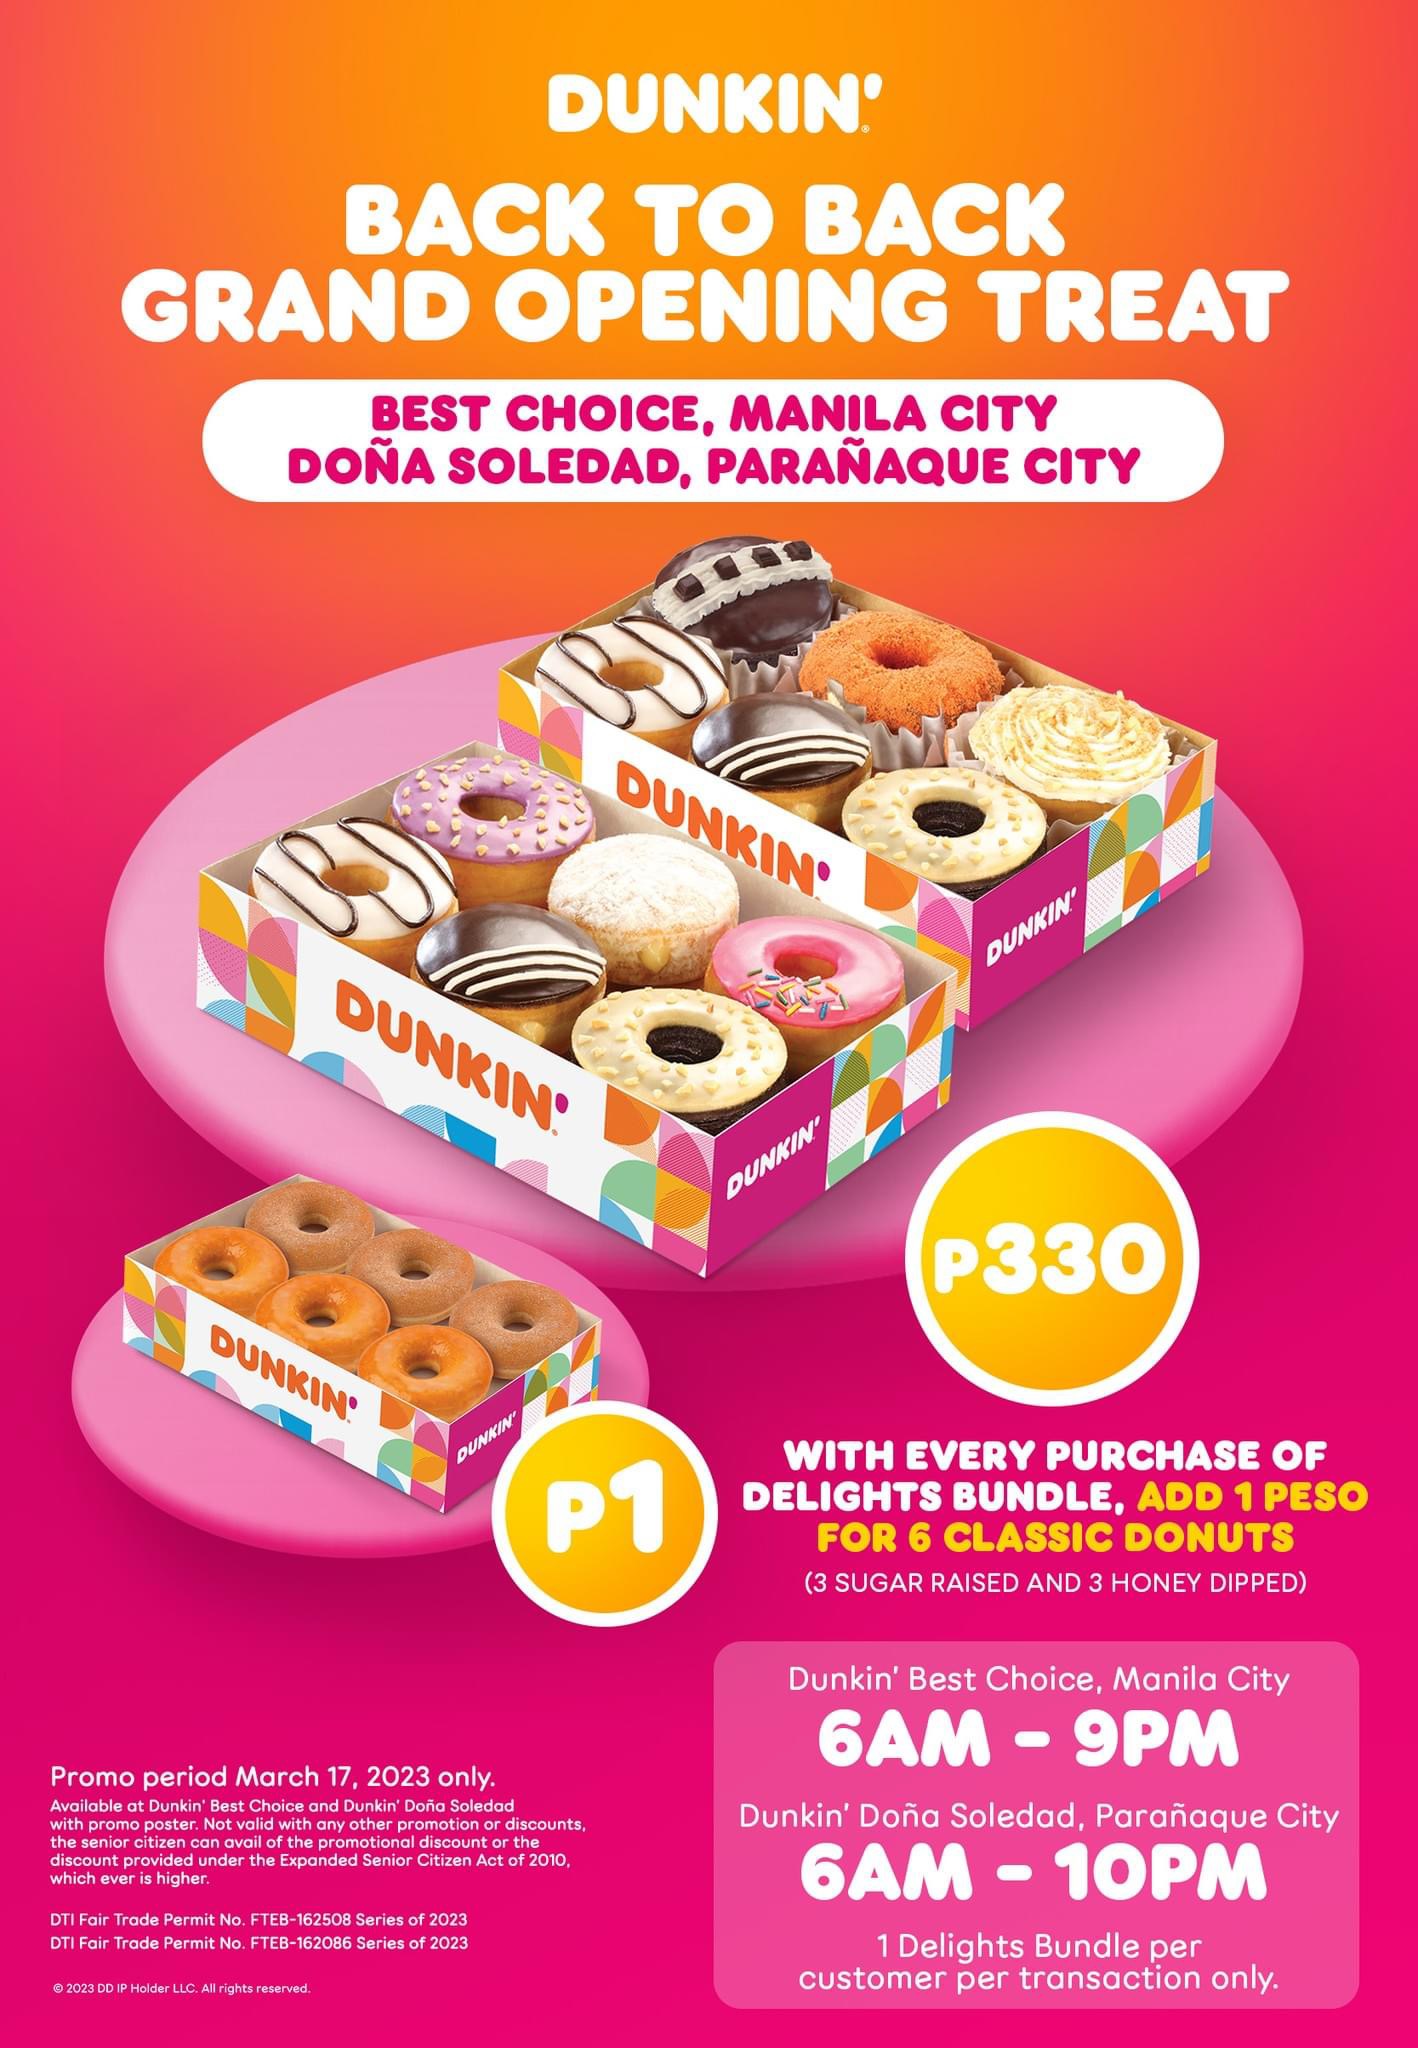 Manila Shopper Dunkin Grand Opening 1 PESO Promo